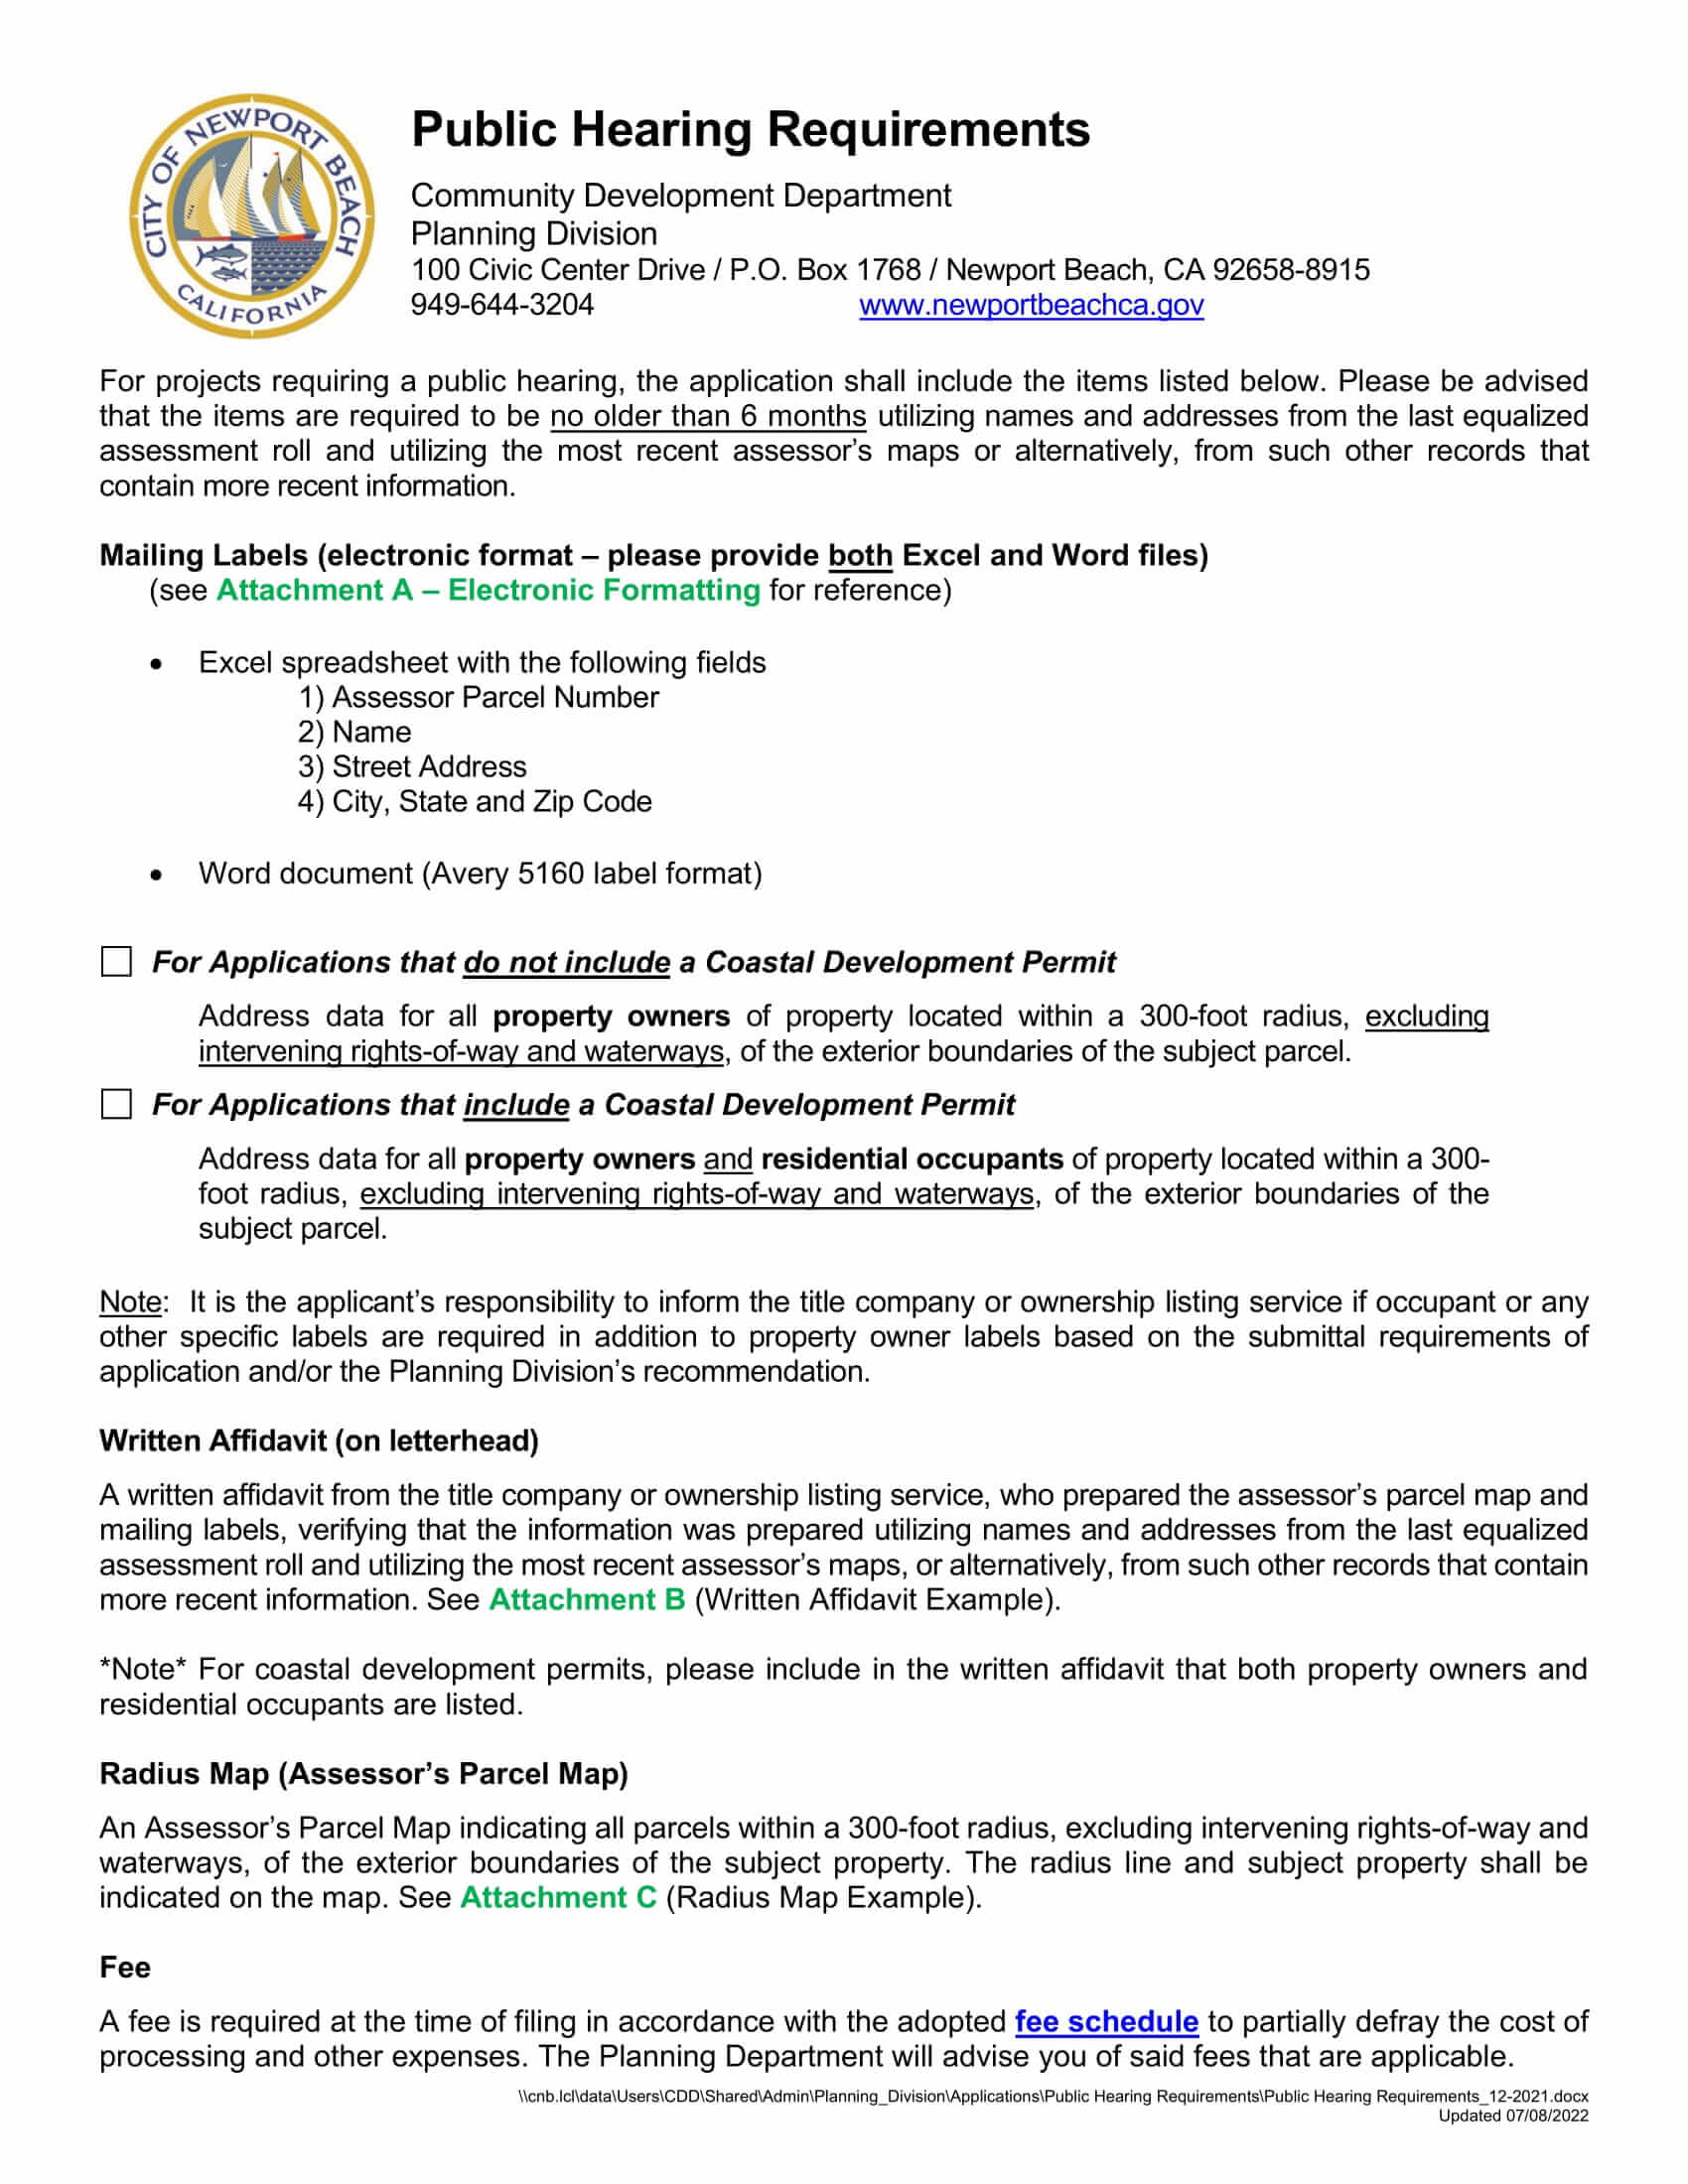 Newport Beach Public Hearing Requirements Mailing Labels Radius Map Written Affidavit